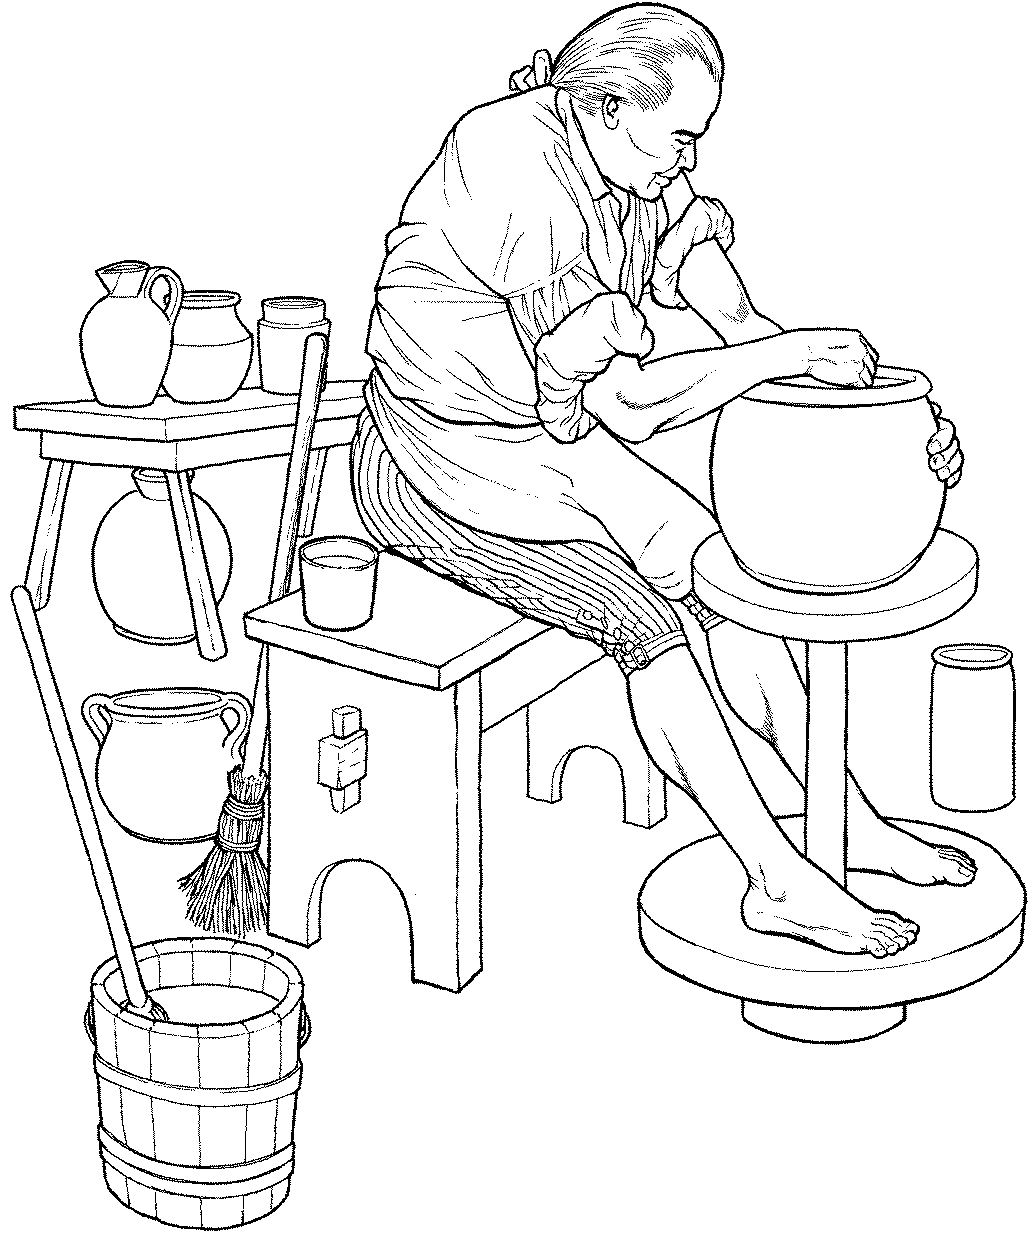 Раскраска труды человека (ремесло, работа, ручная, труд)